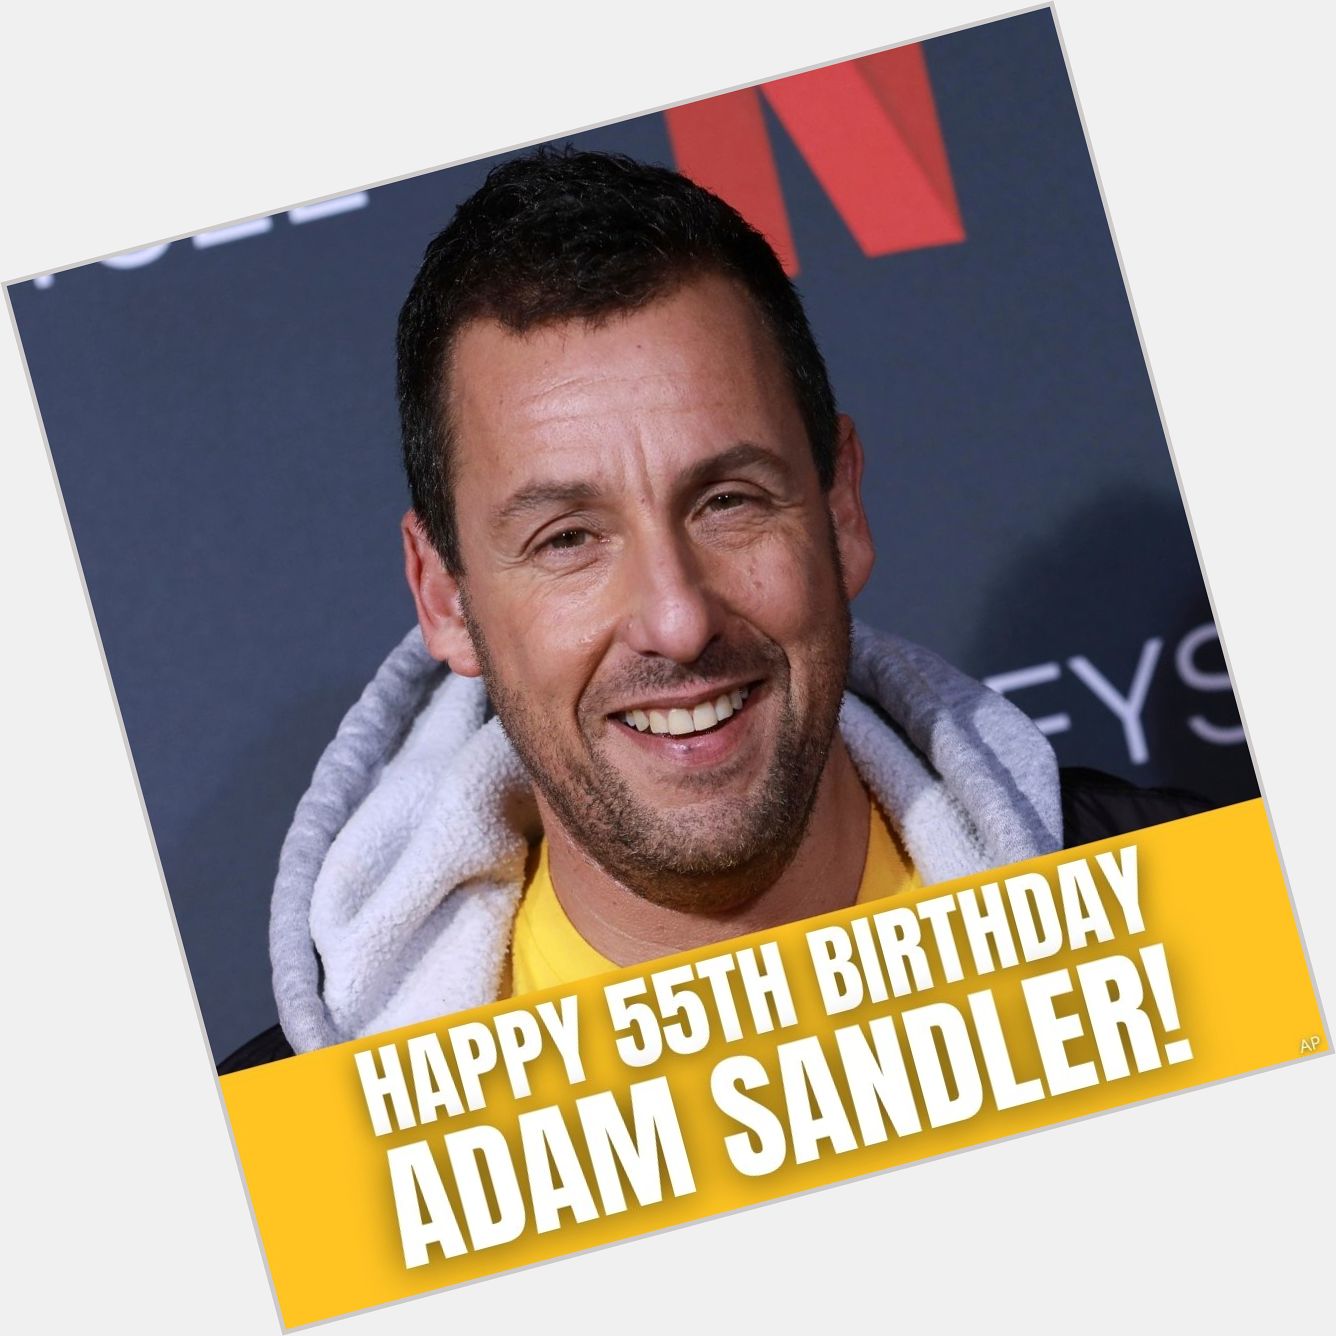 HAPPY BIRTHDAY! Adam Sandler turns 55 today. 